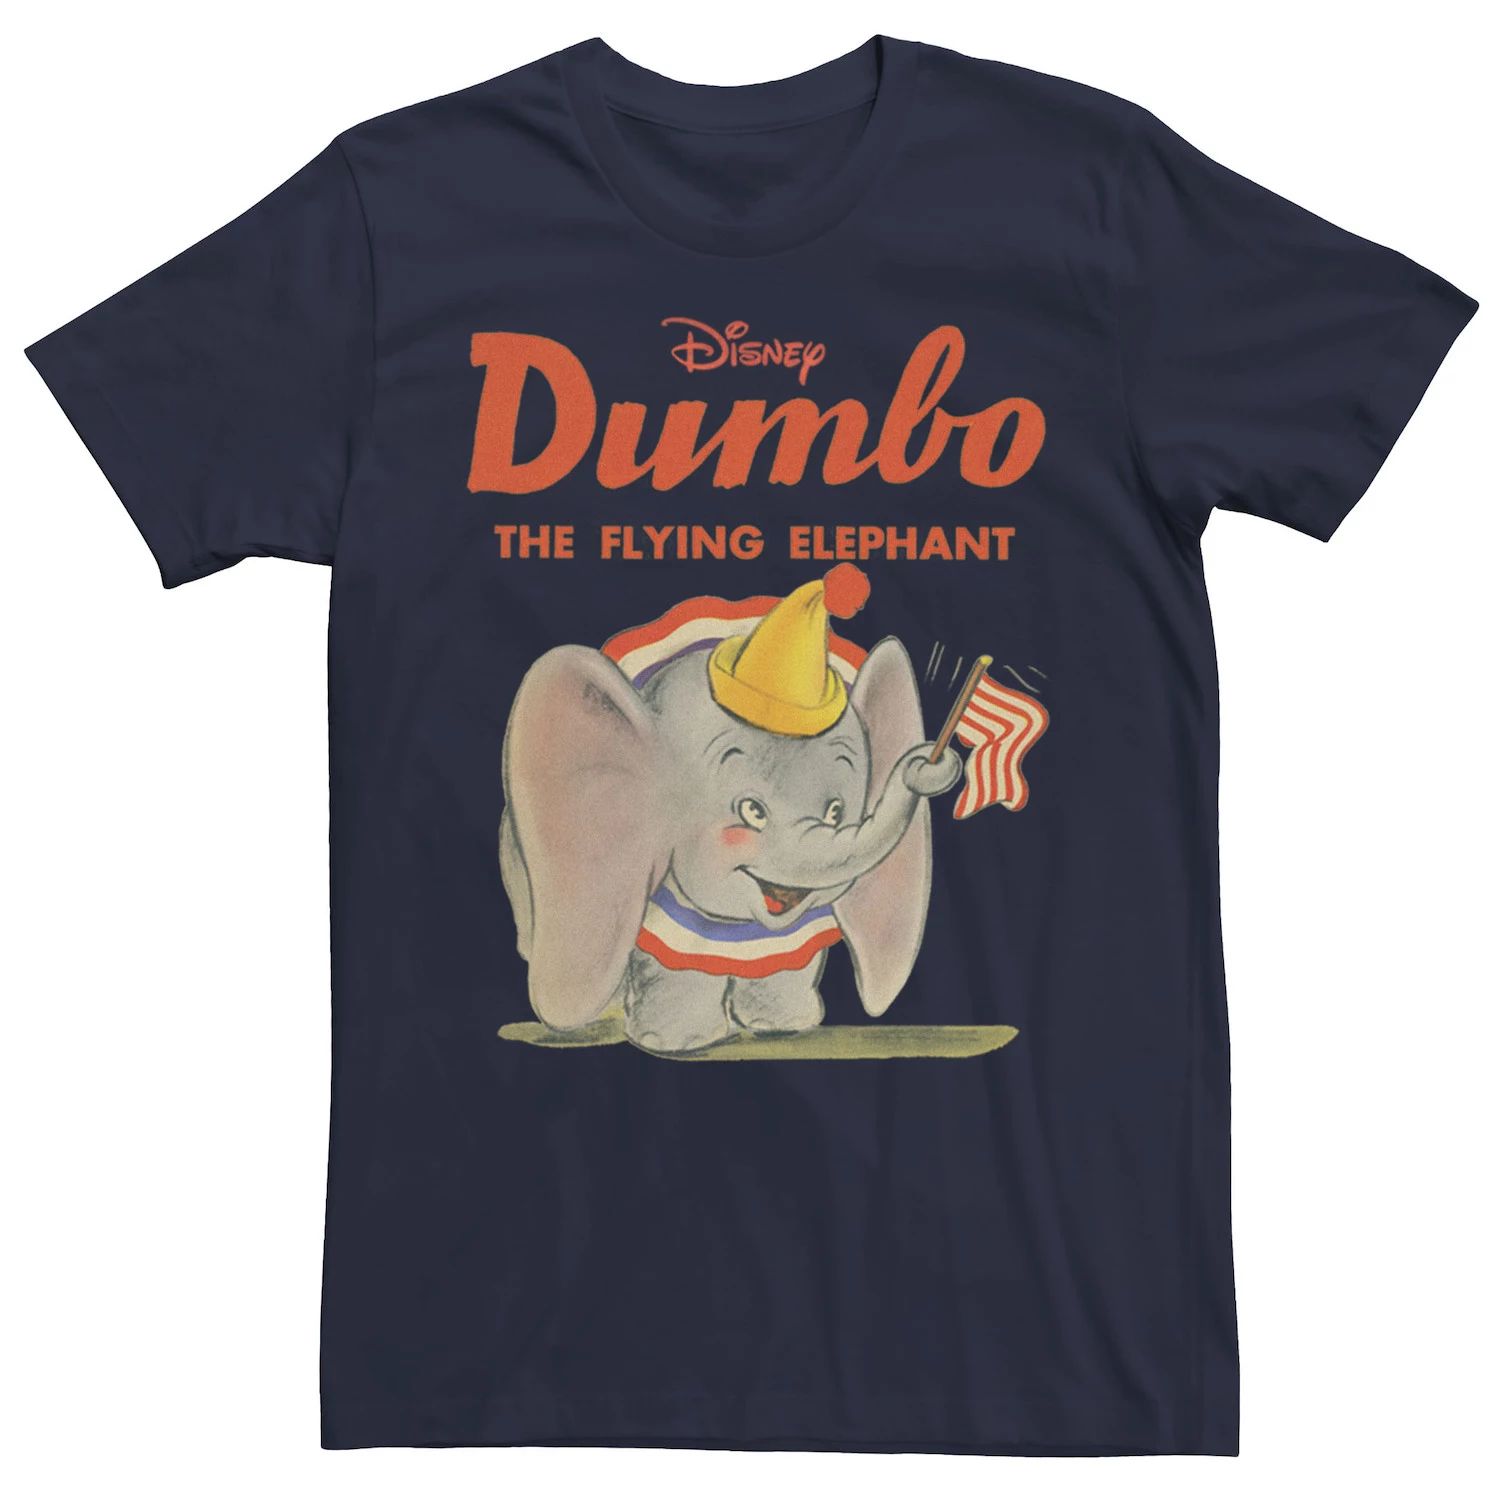 Мужская классическая футболка с портретом Disney Dumbo The Flying Elephant Licensed Character